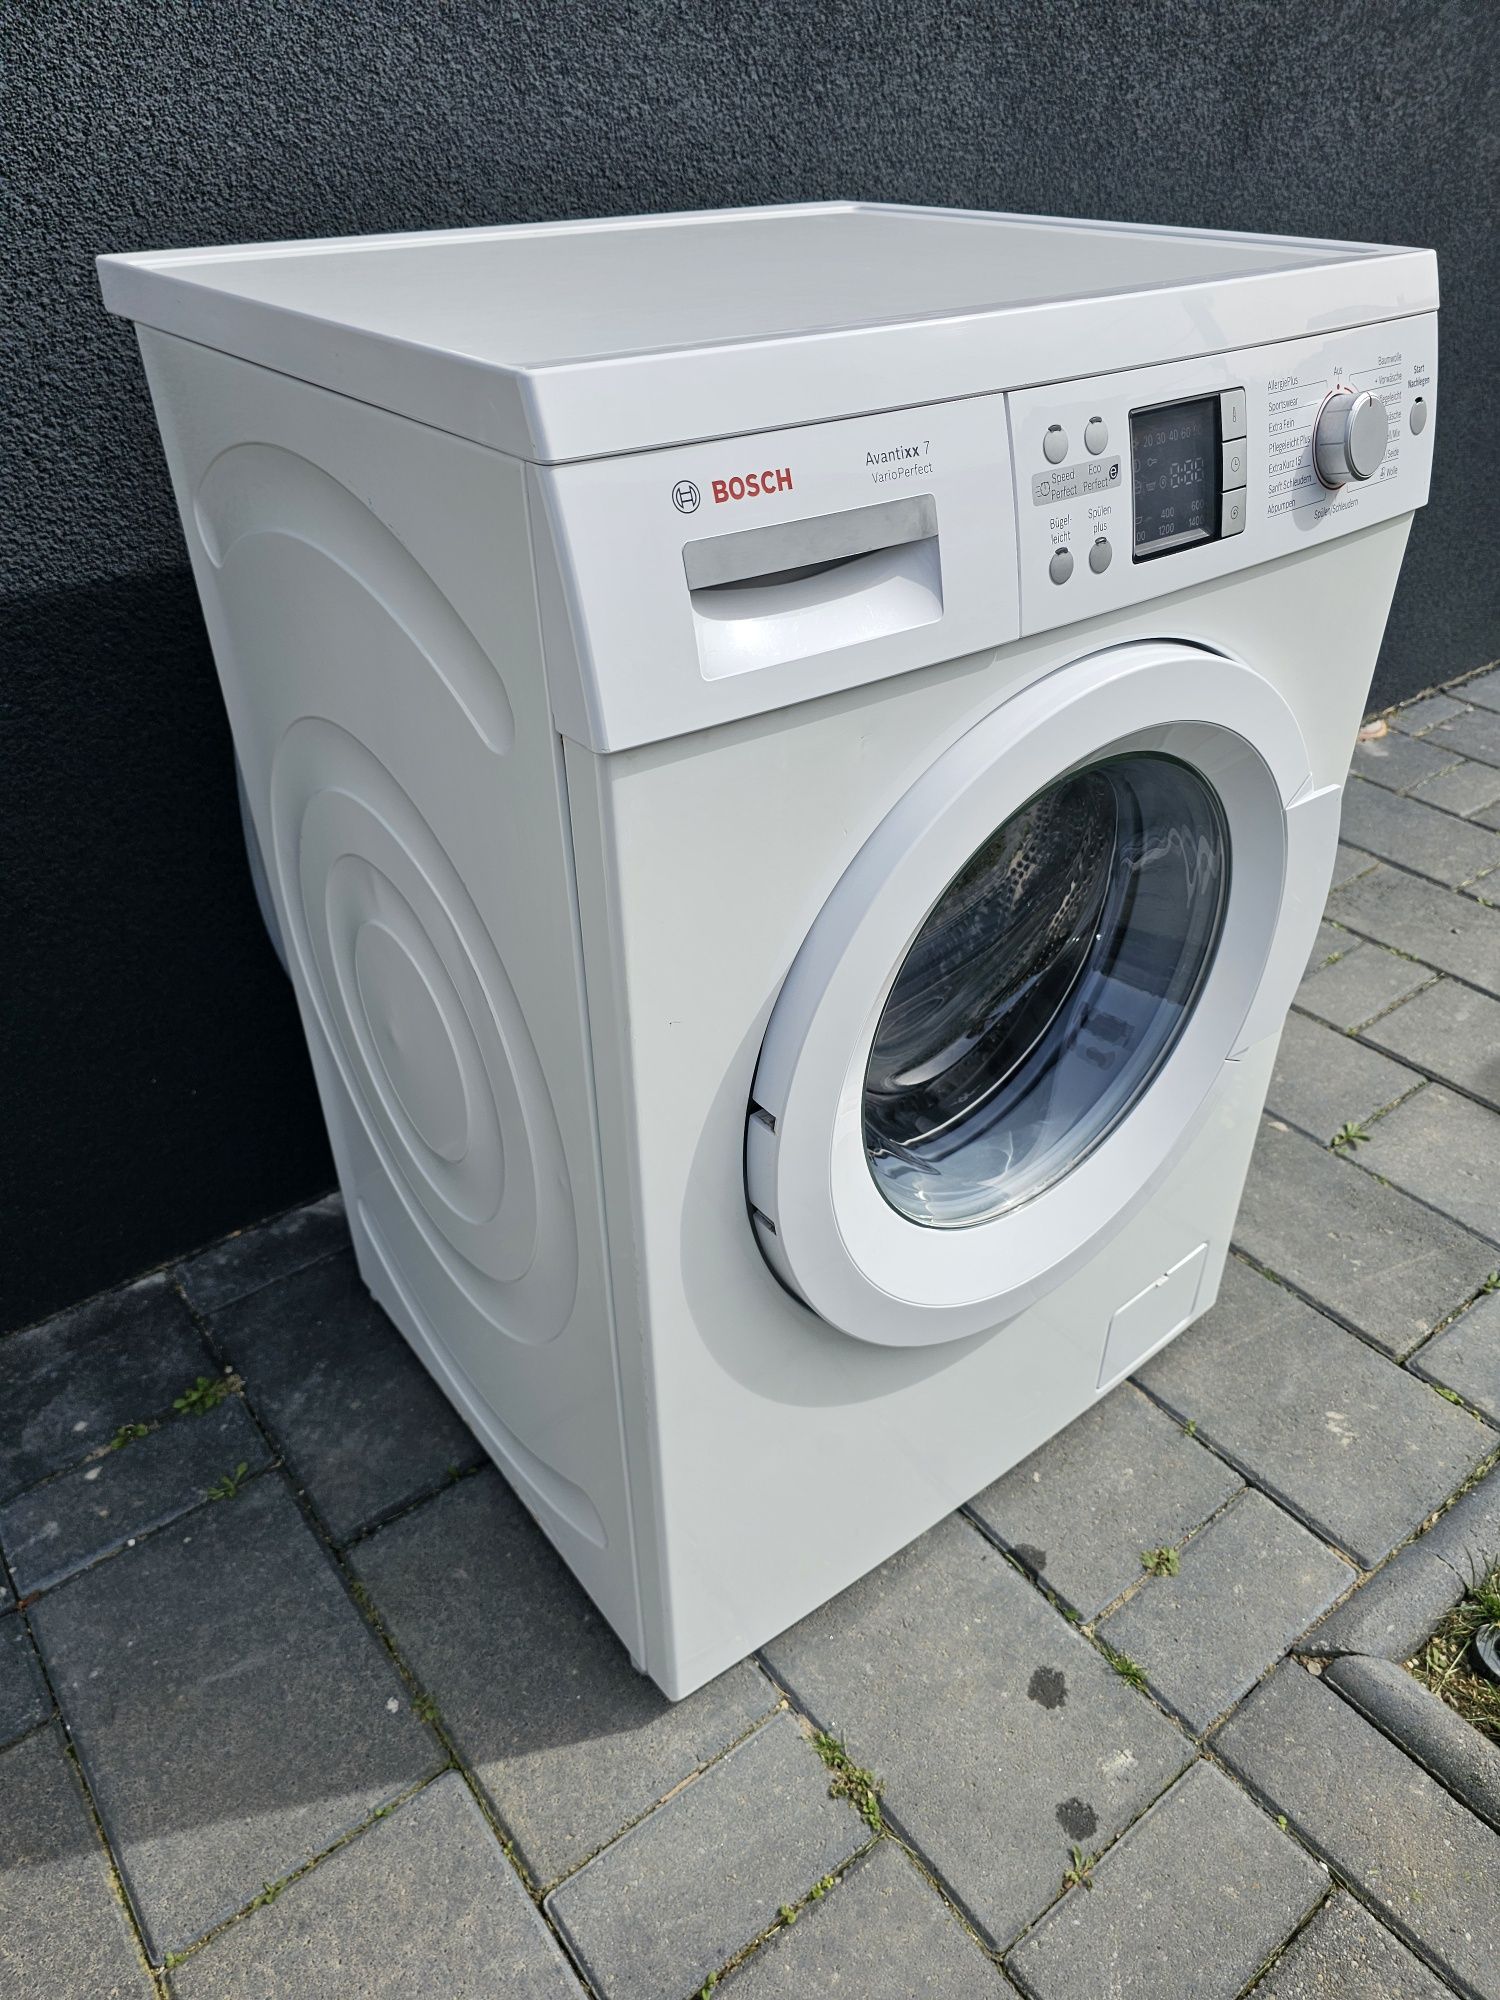 Masina de spălat Bosch Avantixx 7kg A+++ 1400rotatii